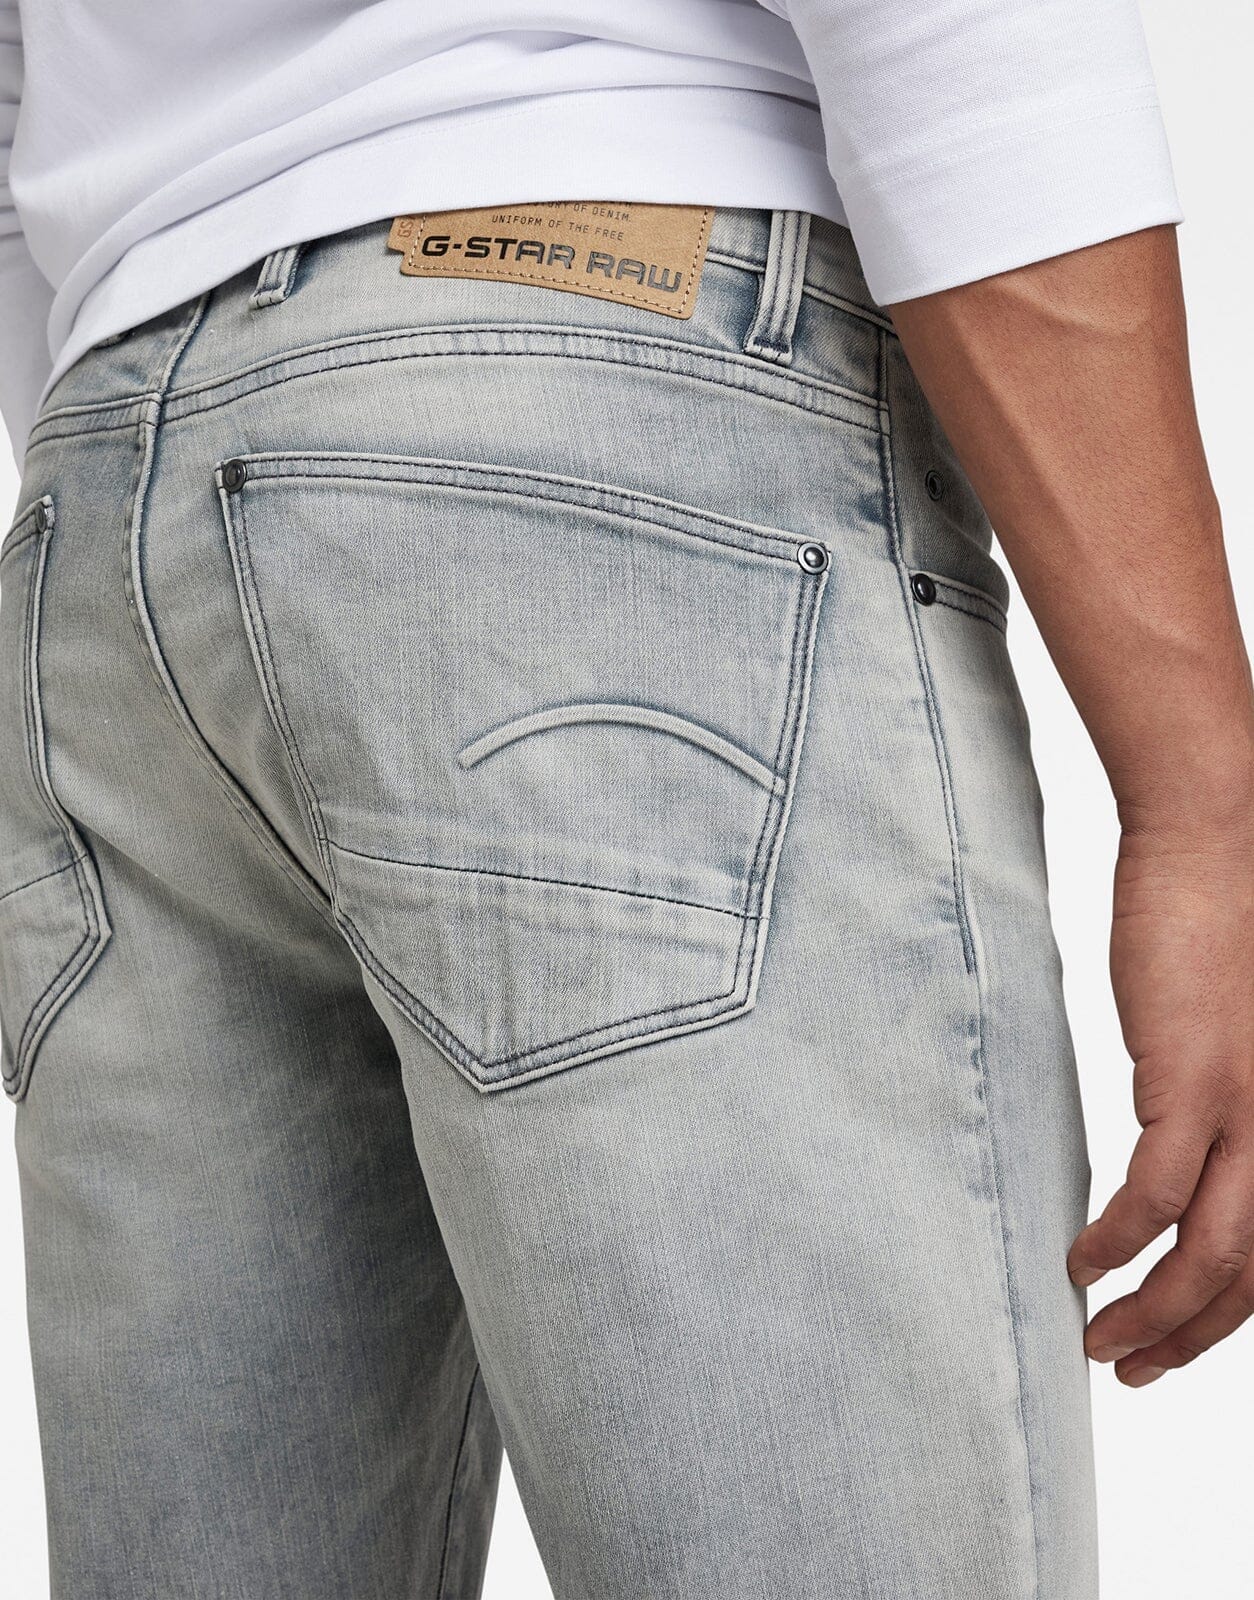 G-Star RAW Revend Fwd Light Grey Jeans - Subwear